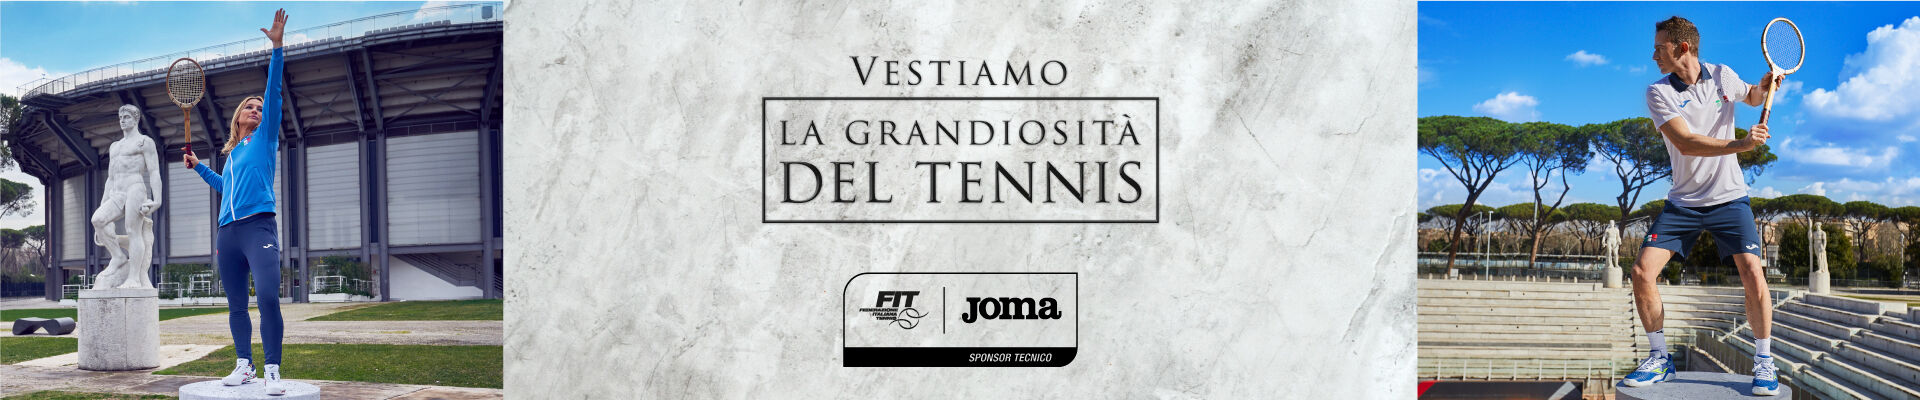 federacion italiana de tenis